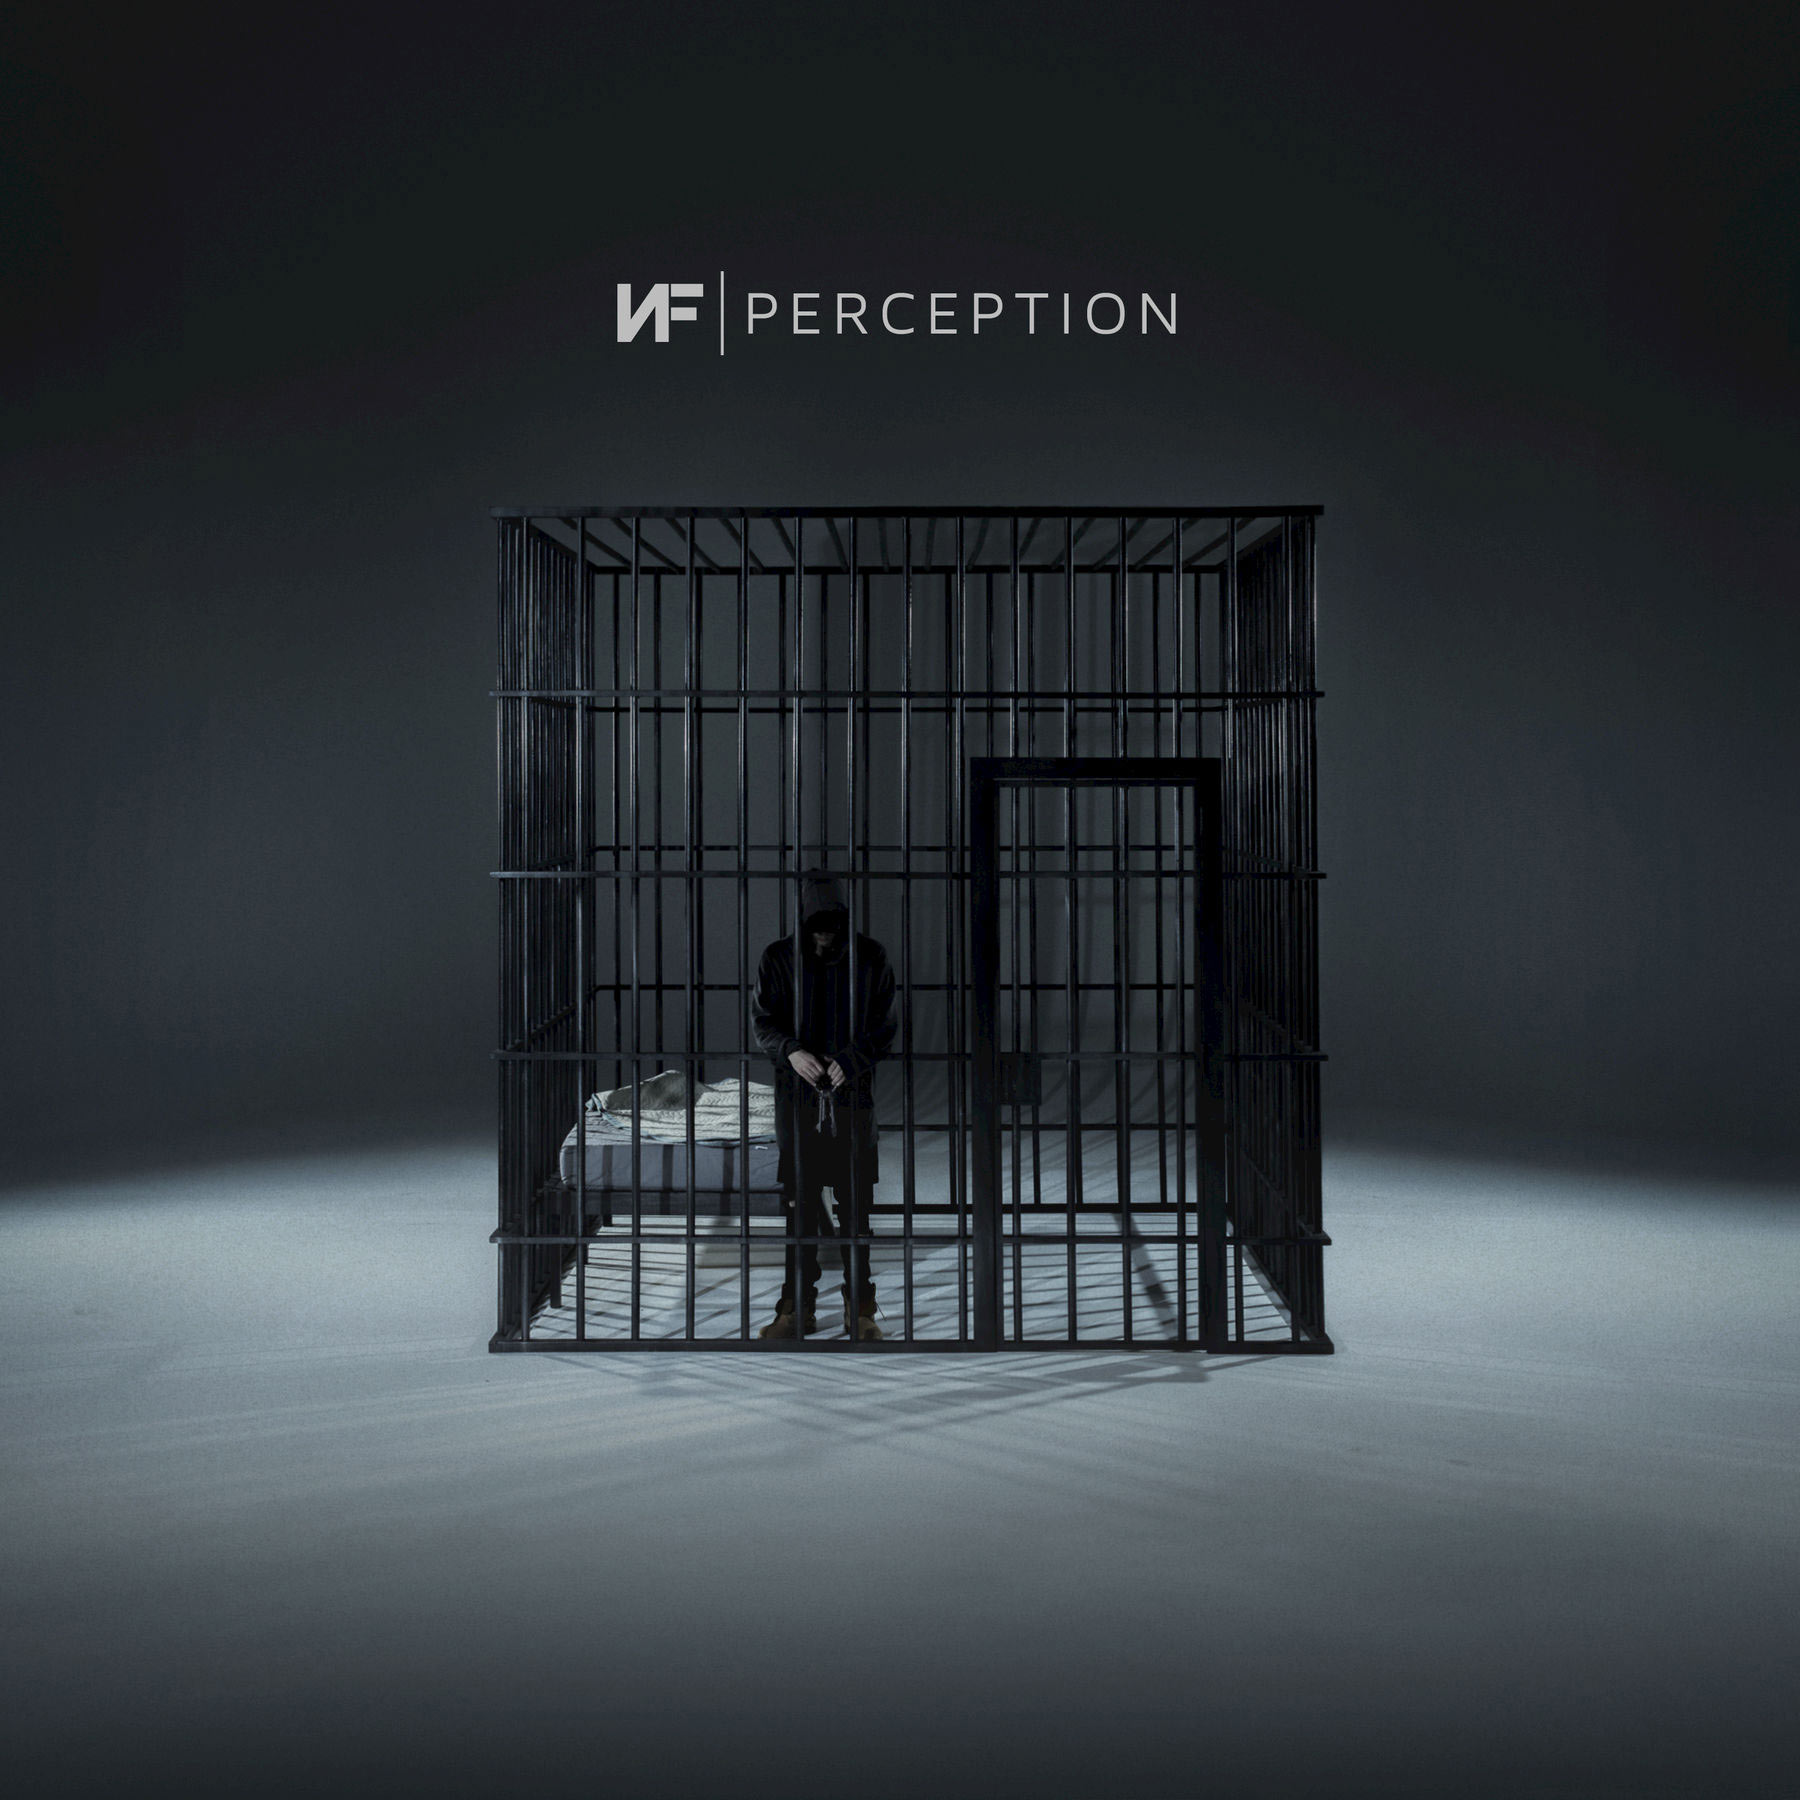 nf perception album download free